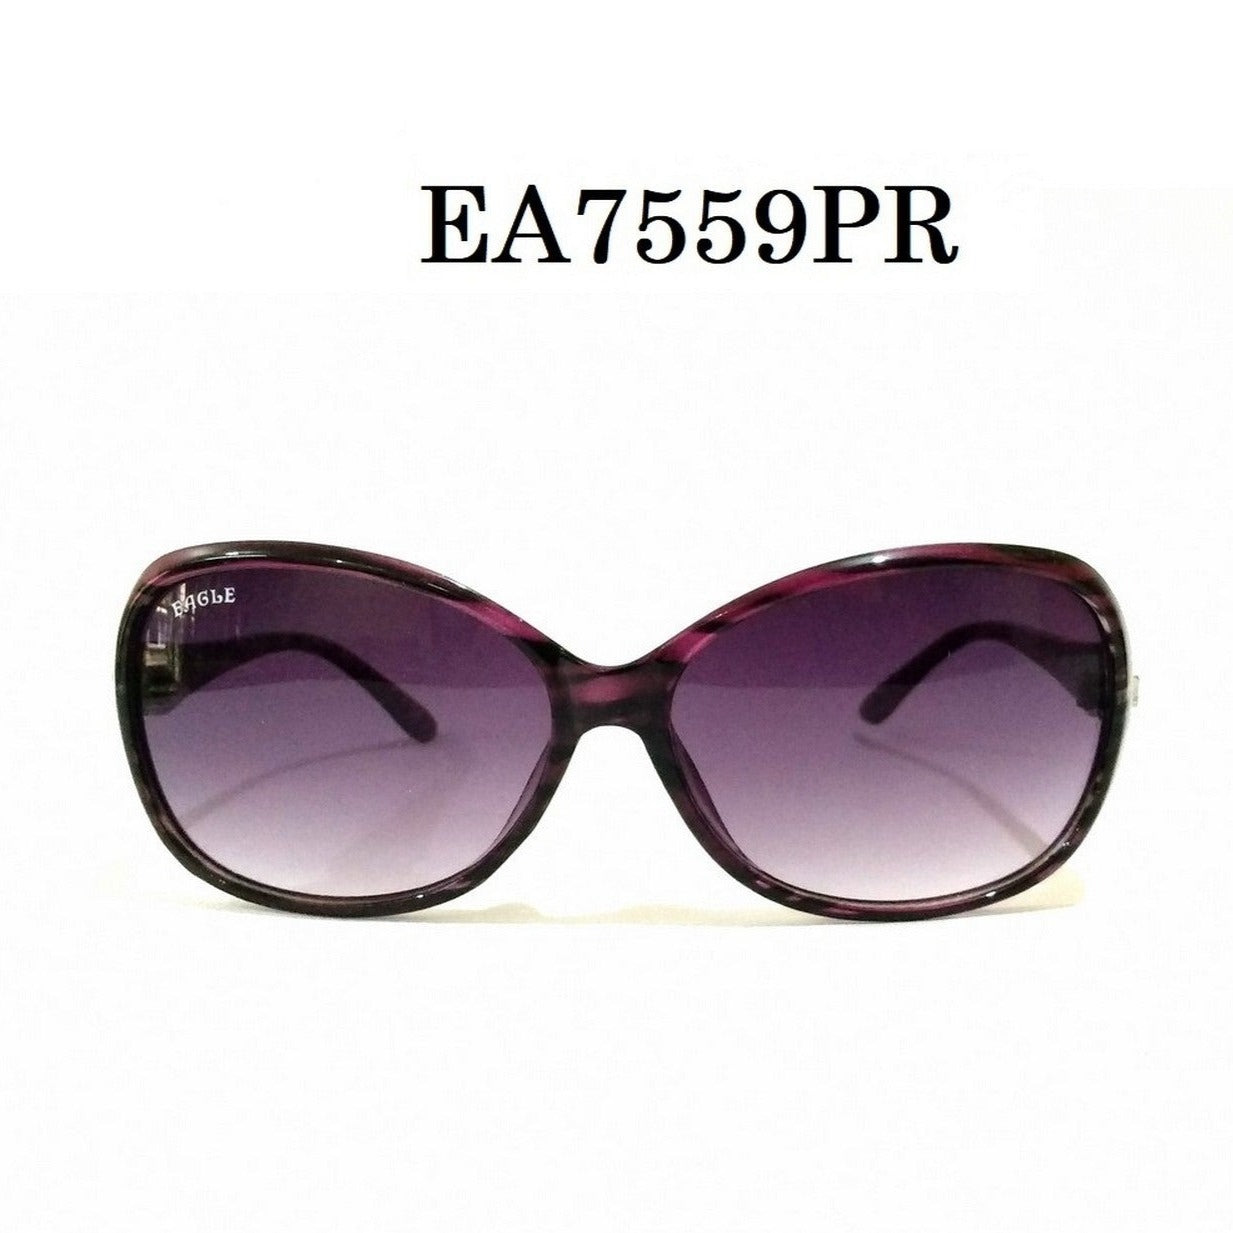 Purple Sunglasses for Women EA7559PR - Glasses India Online